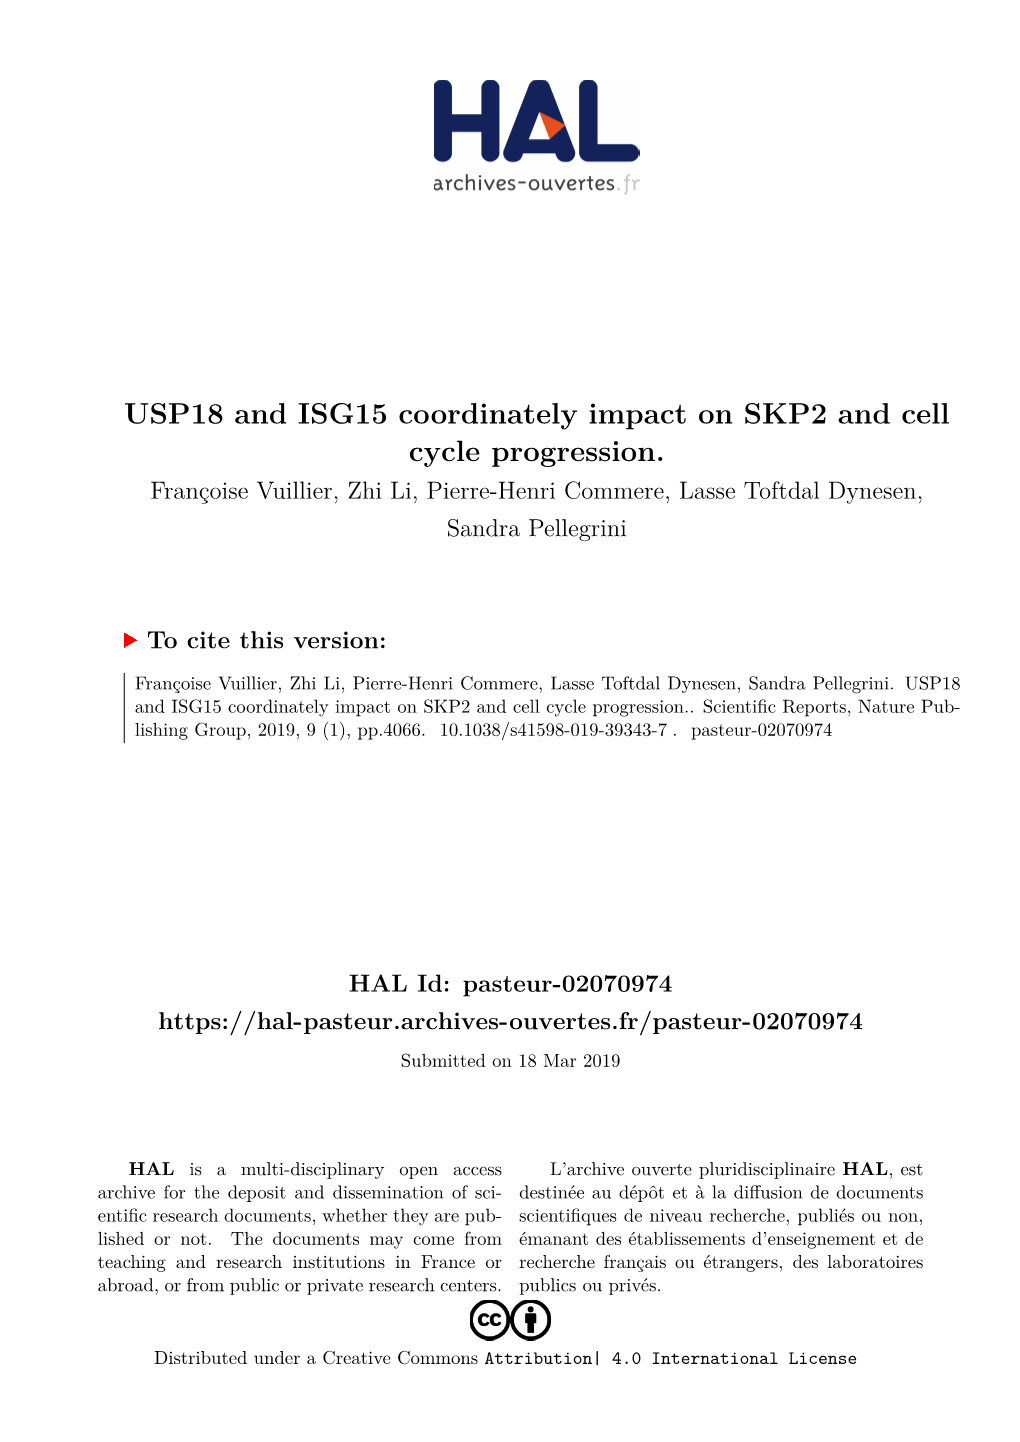 USP18 and ISG15 Coordinately Impact on SKP2 and Cell Cycle Progression. Françoise Vuillier, Zhi Li, Pierre-Henri Commere, Lasse Toftdal Dynesen, Sandra Pellegrini